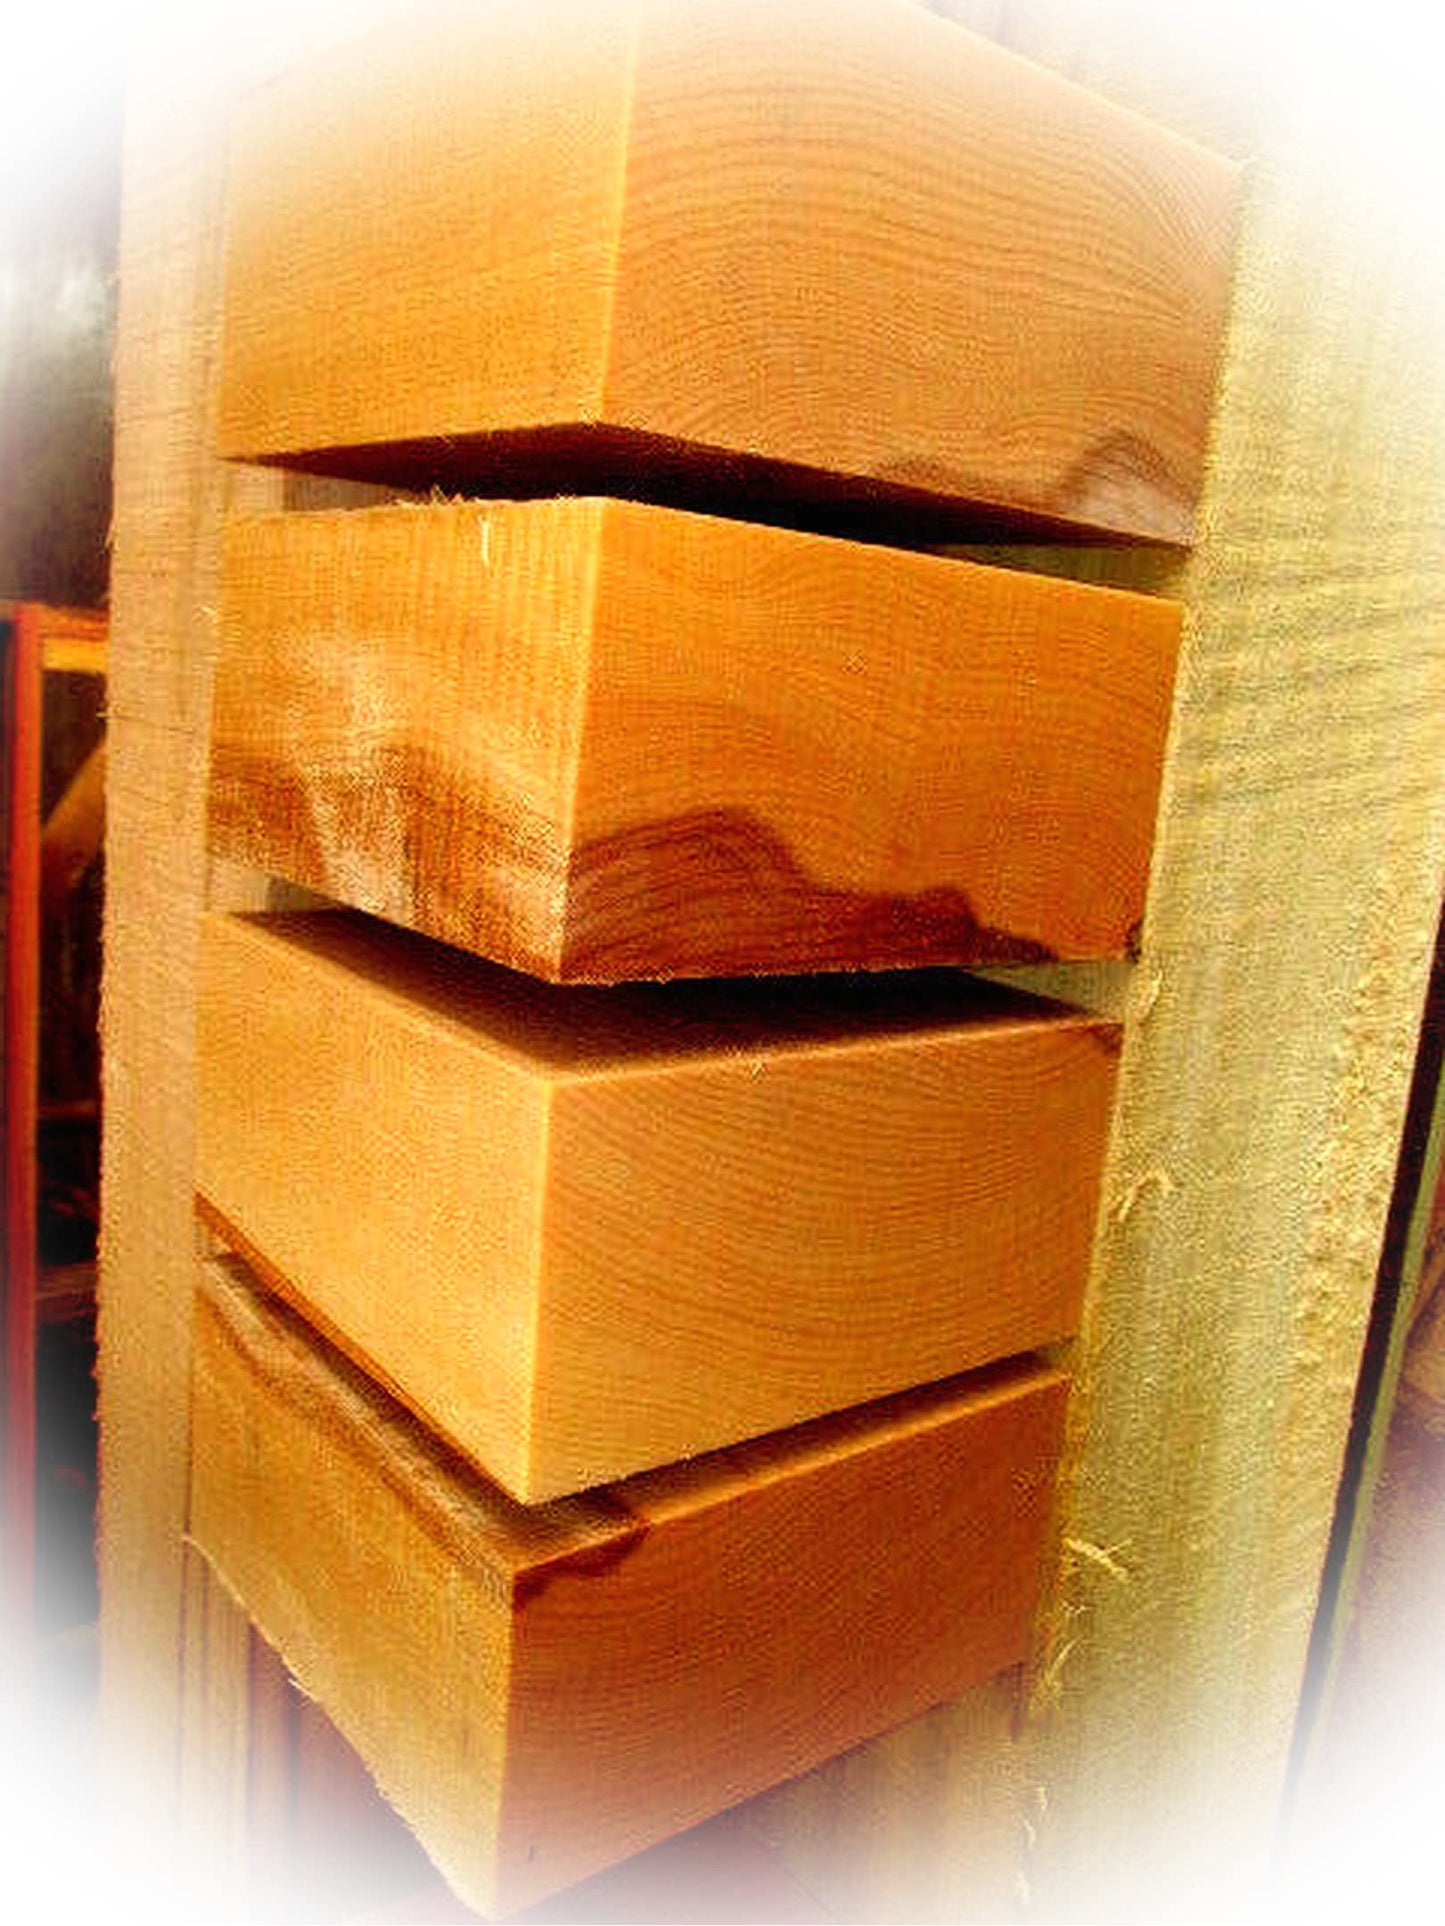 New Four (4) Beautiful Beech Bowl Turning Blanks Lumber Wood Lathe Carve 6 X 6 X 3" Craft Wood Kit Set Supplies MON-1136TO